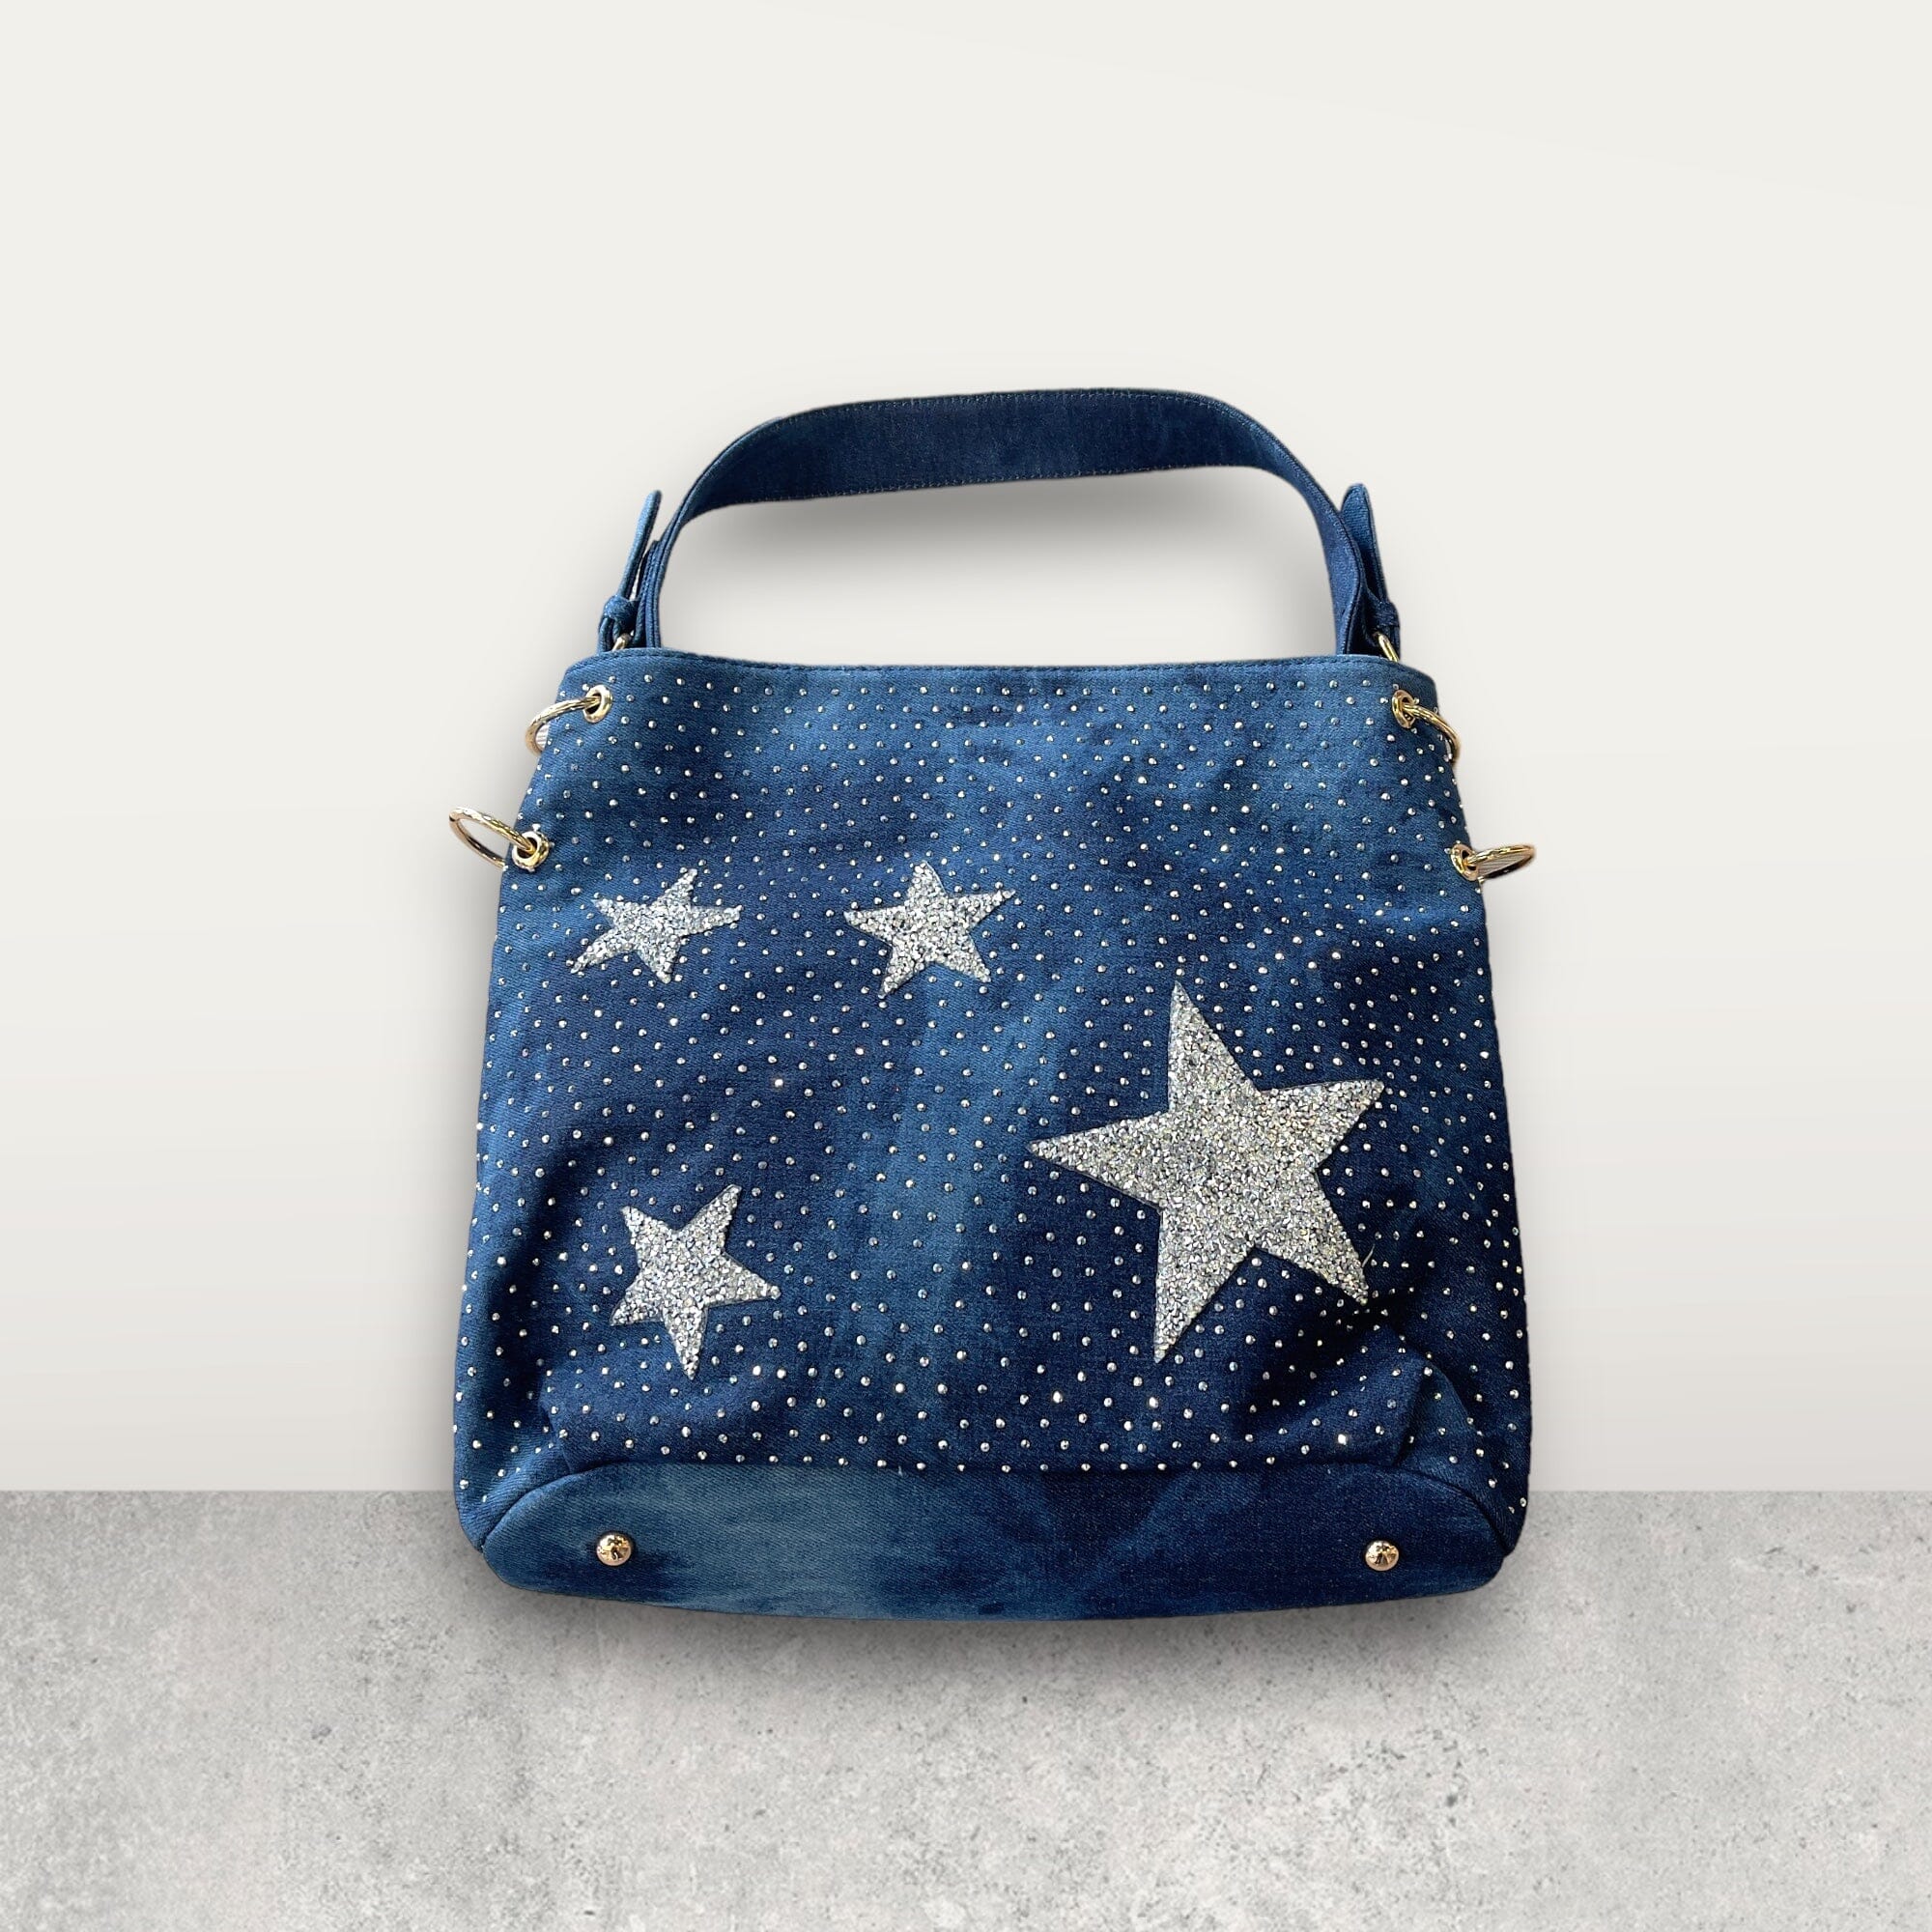 STAR CRYSTAL EMBELLISHED DENIM HANDBAG Handbag Manocchio Denim Blue 